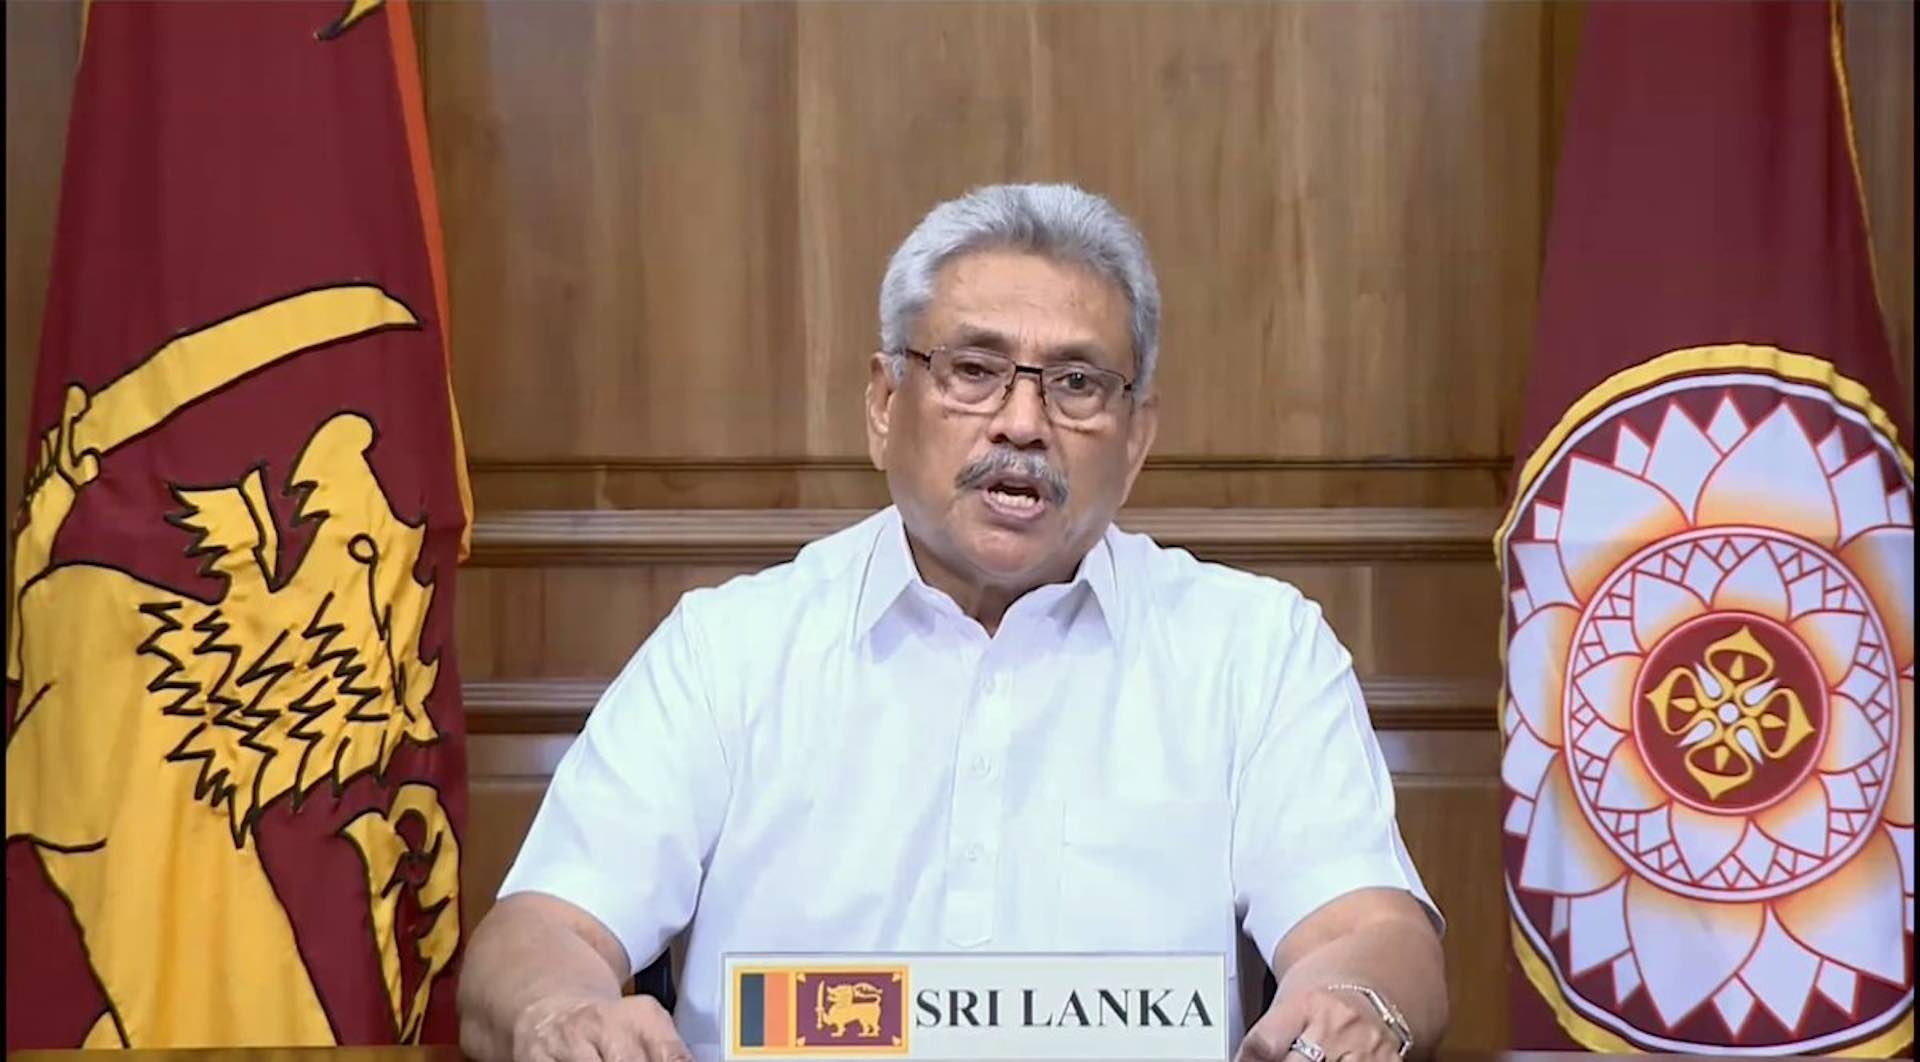 Disgraced Sri Lankan President Gotabaya Rajapaksa to step down